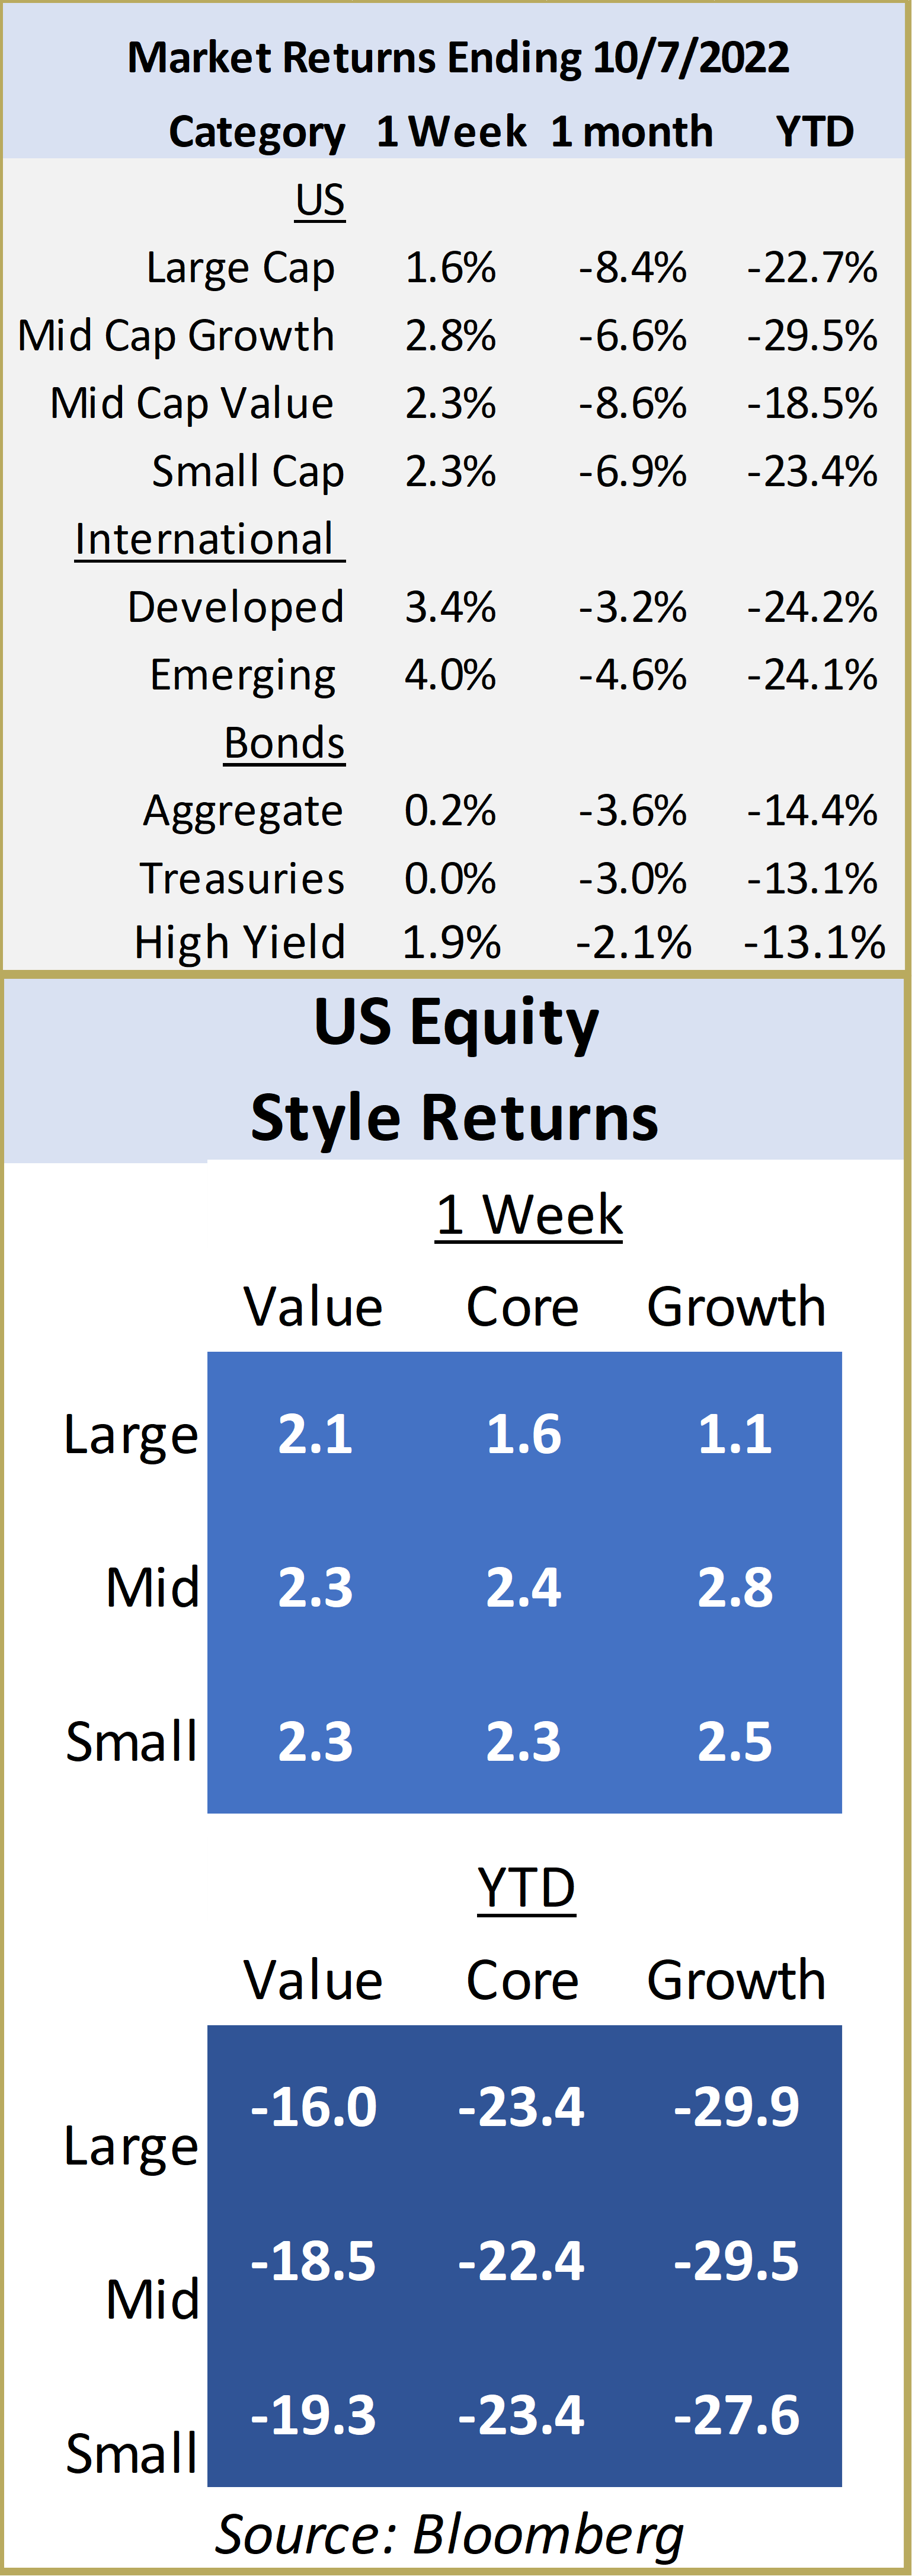 TMarket Returns Ending 10/7/2022 and US Equity Style Returns